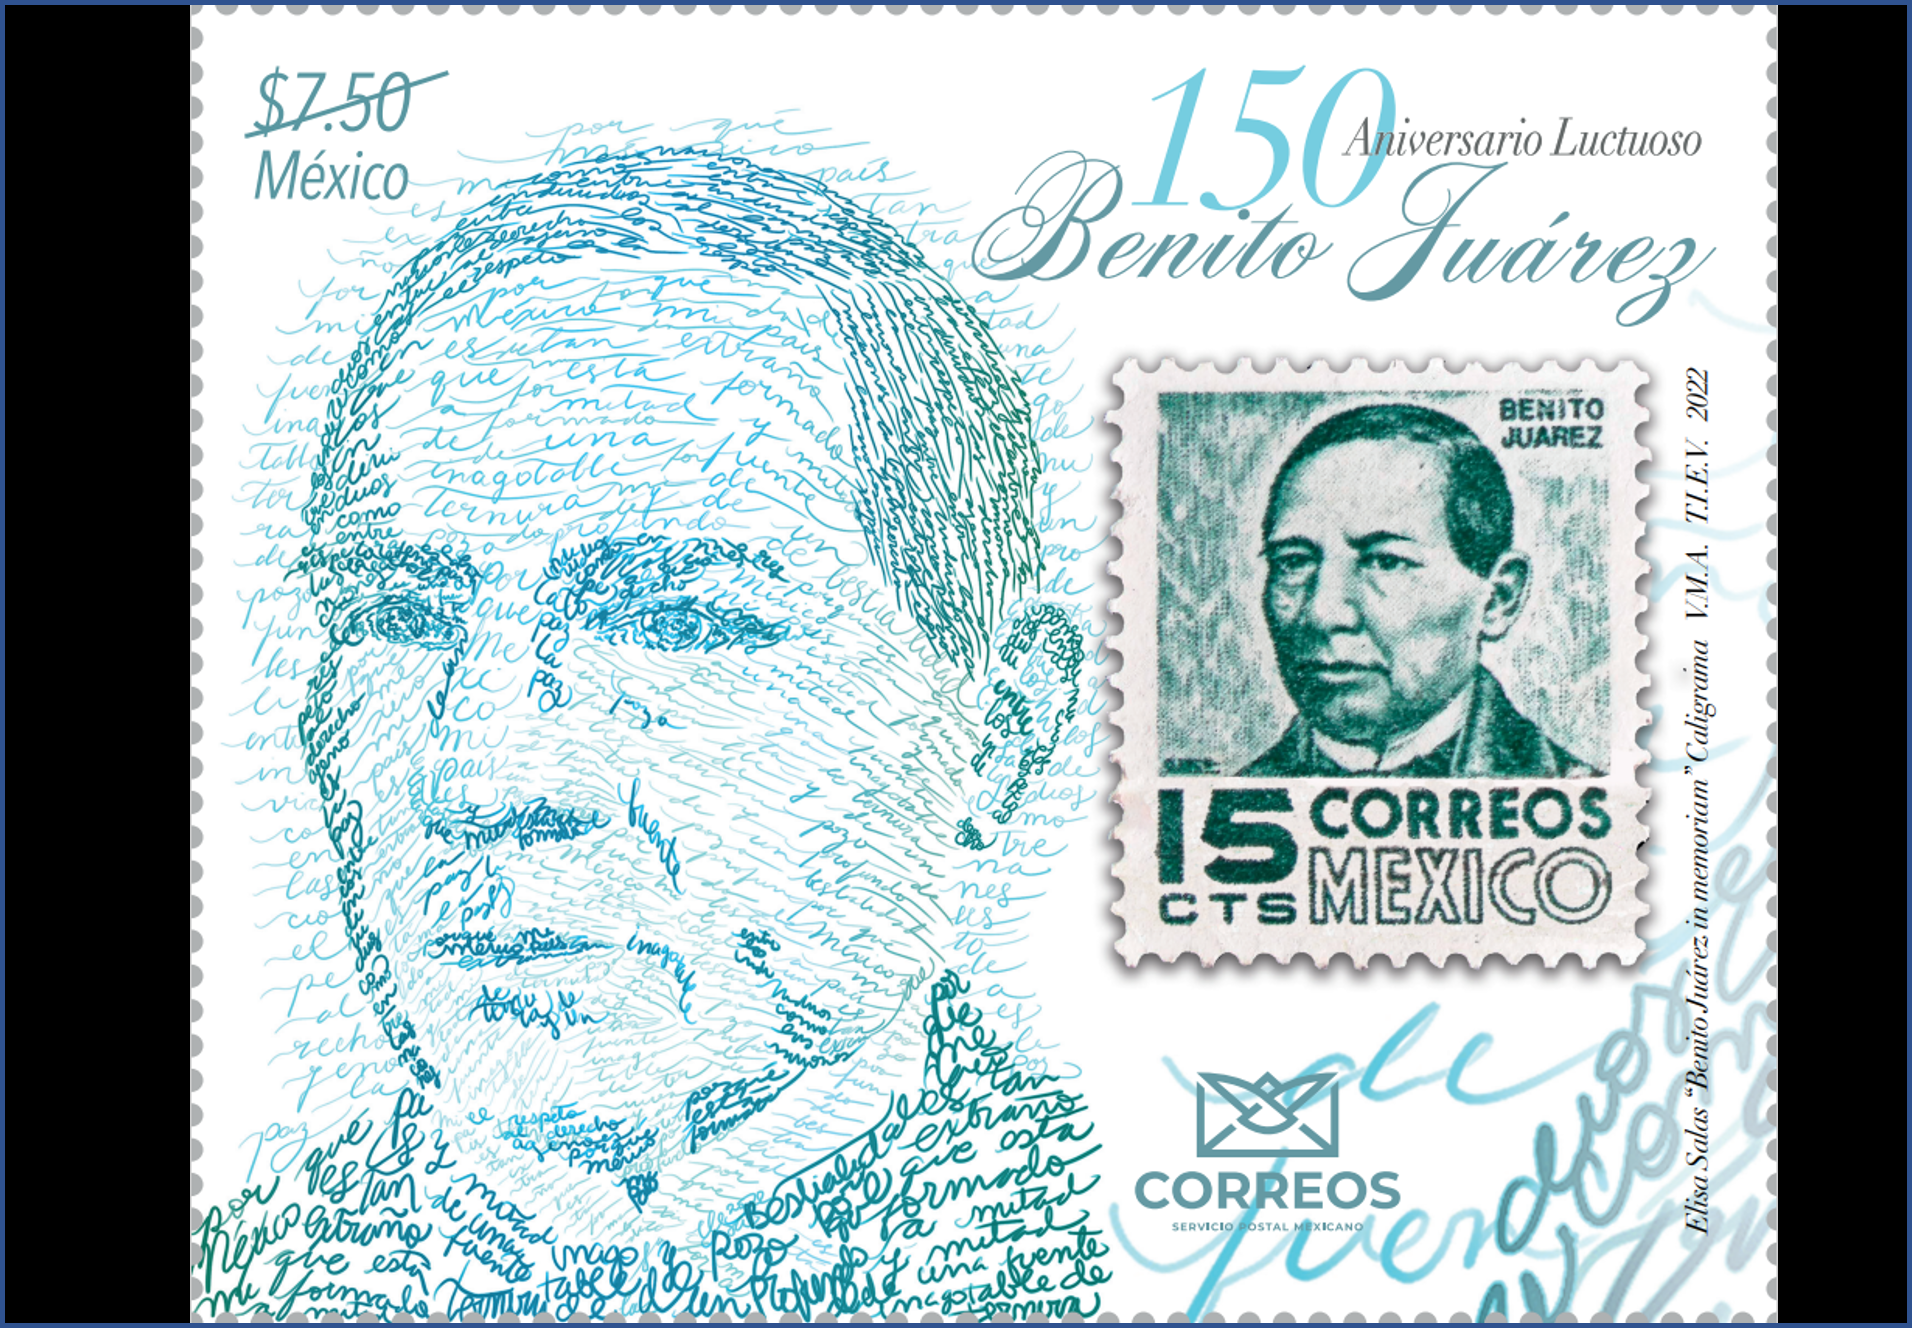 150 Aniversario Luctuoso de Benito Juárez